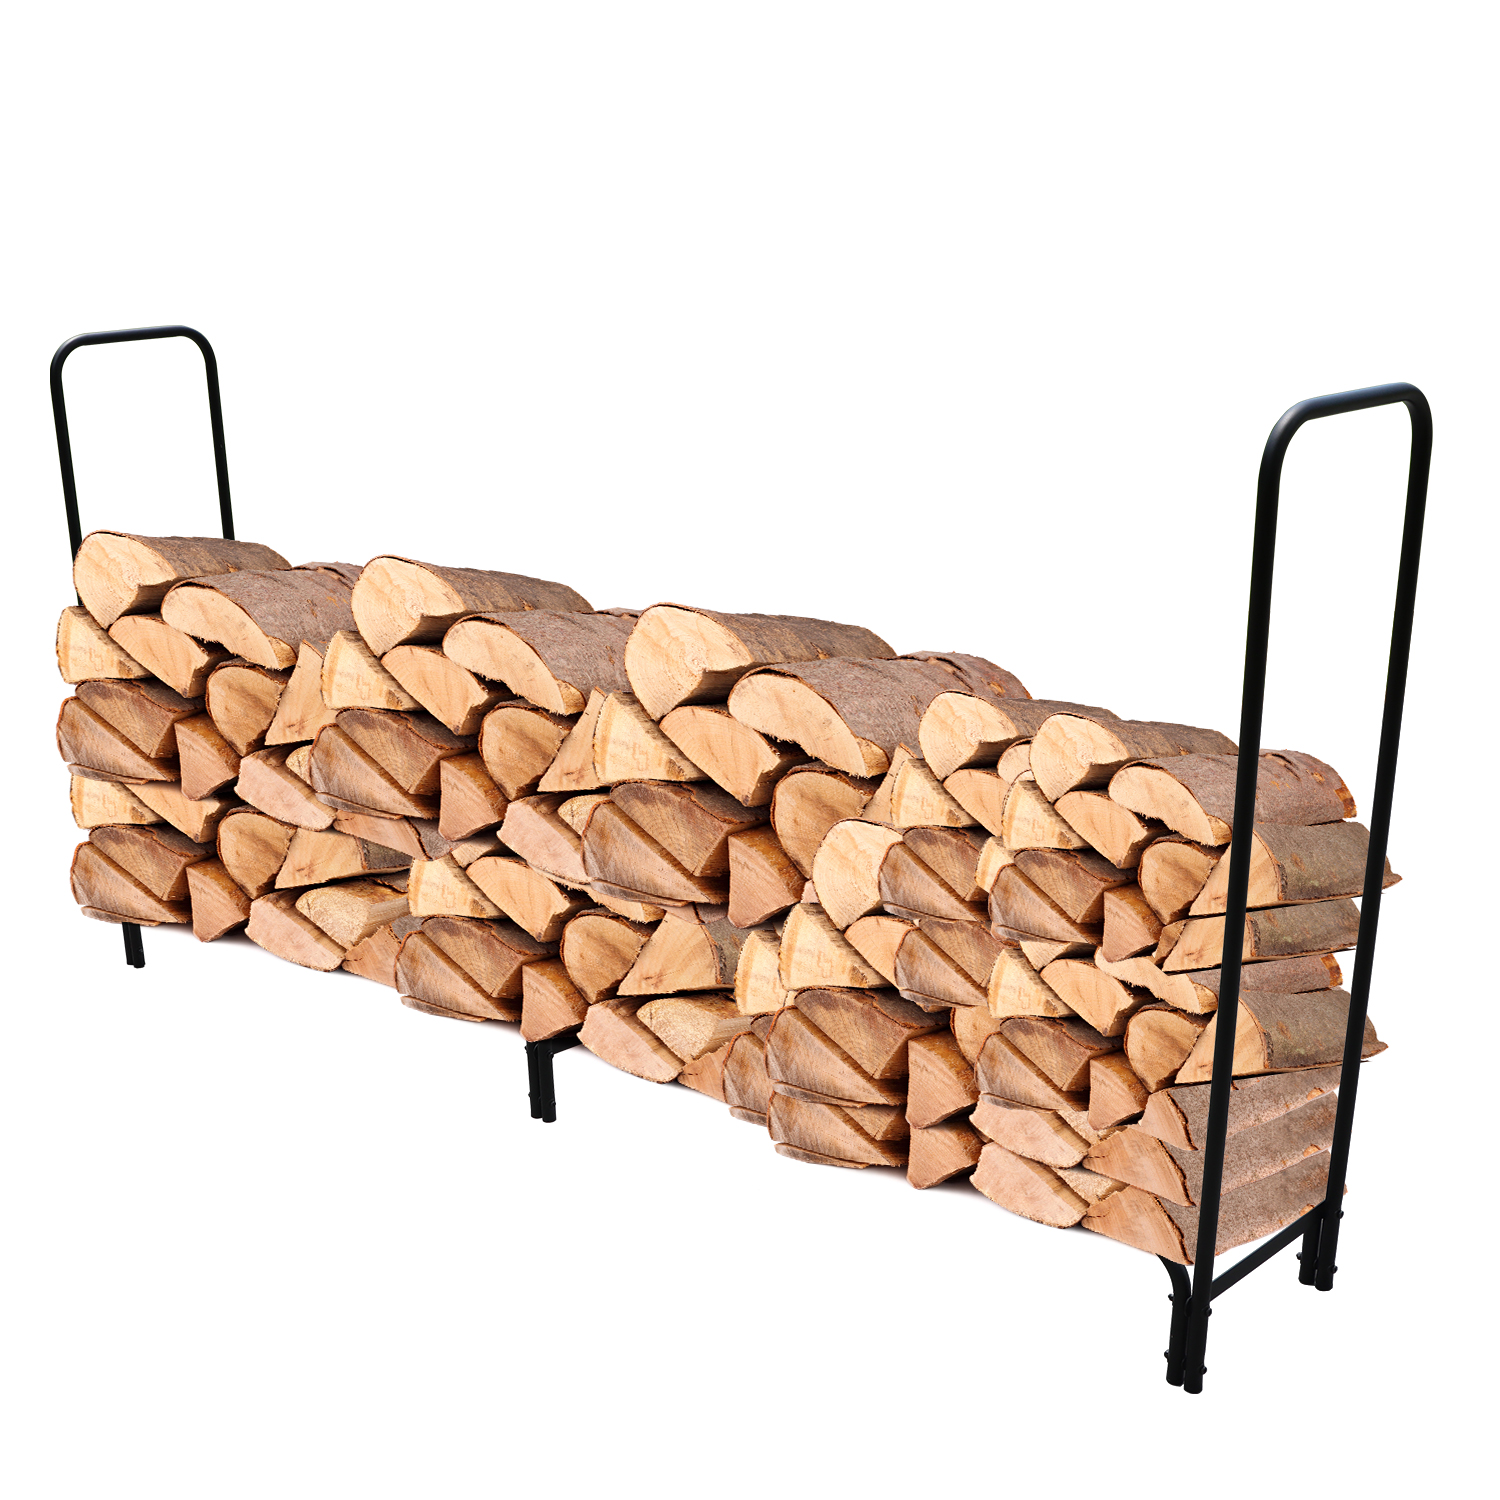 8ft Firewood Rack Heavy Duty Log Rack Indoor Outdoor Wood Rack for Firewood Metal Wood Stacker Wood Holder for Fireplace Patio Deck (8ft)-CASAINC